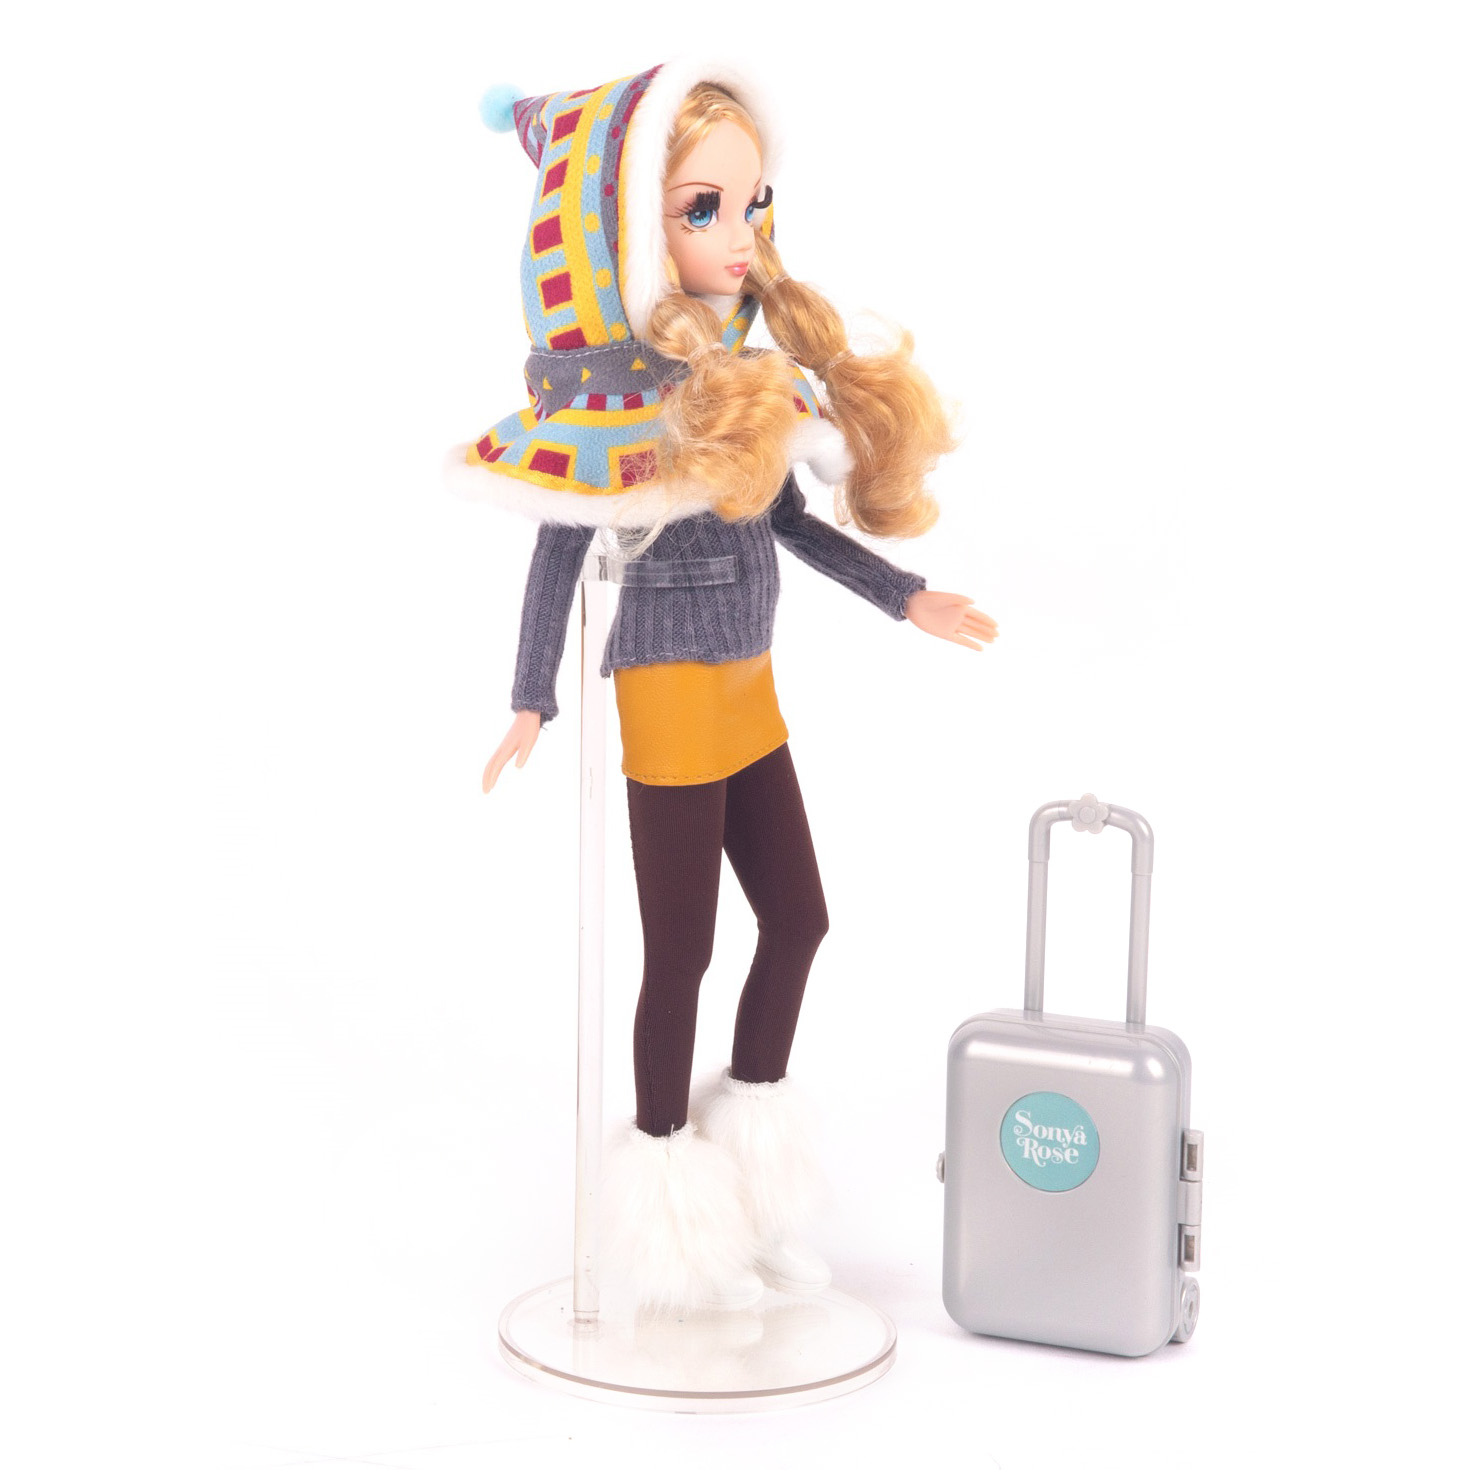 Кукла Sonya Rose R4424N серия "Daily collection" Путешествие в Швецию